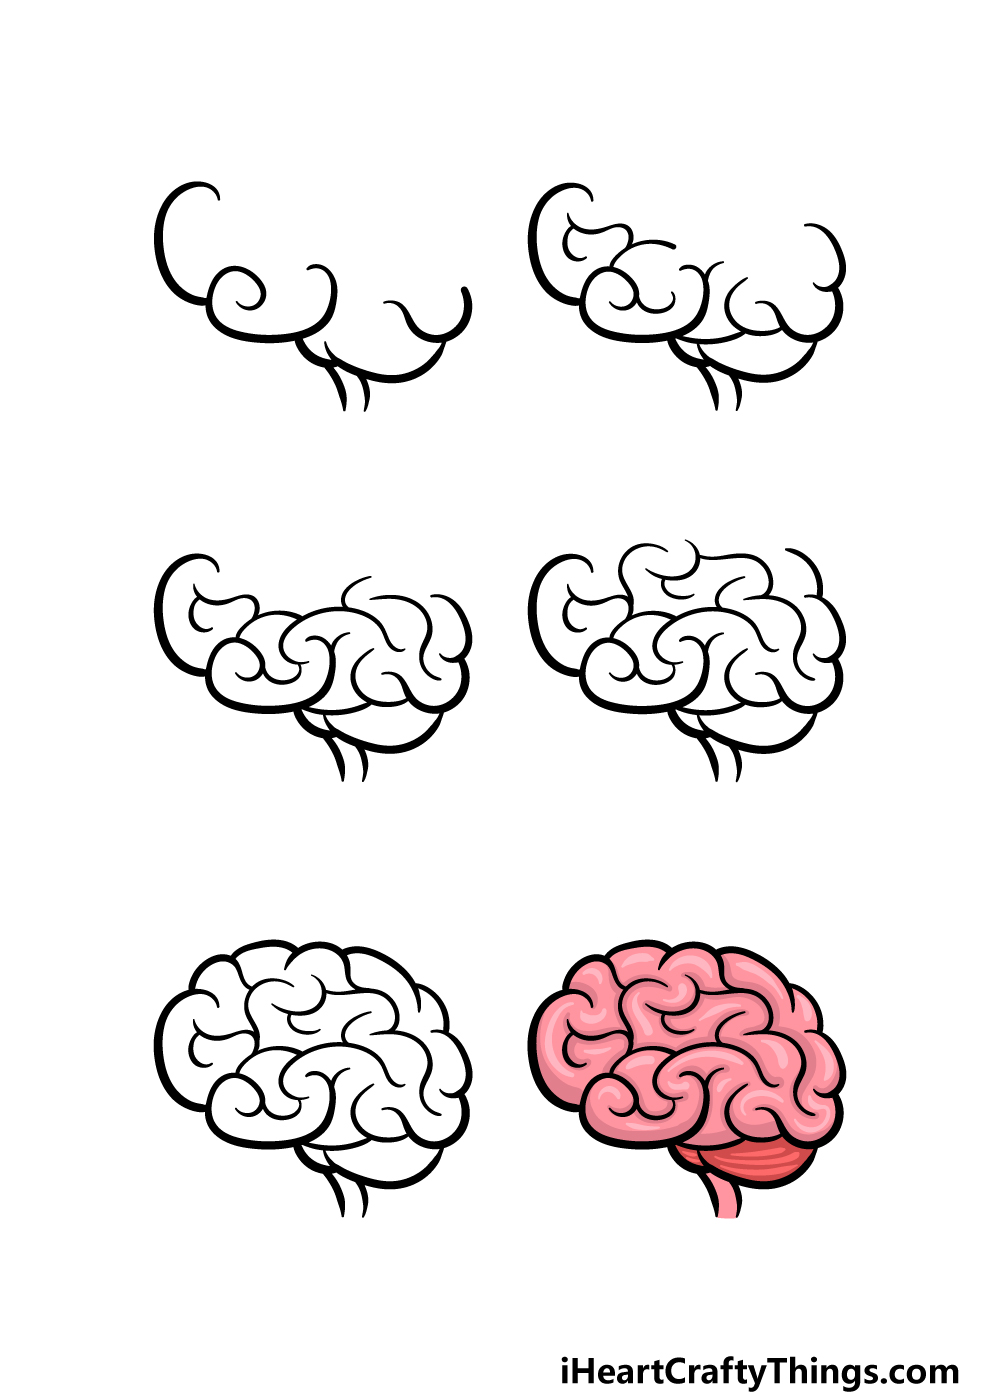 Cartoon Brain Drawing - How To Draw A Cartoon Brain Step By Step